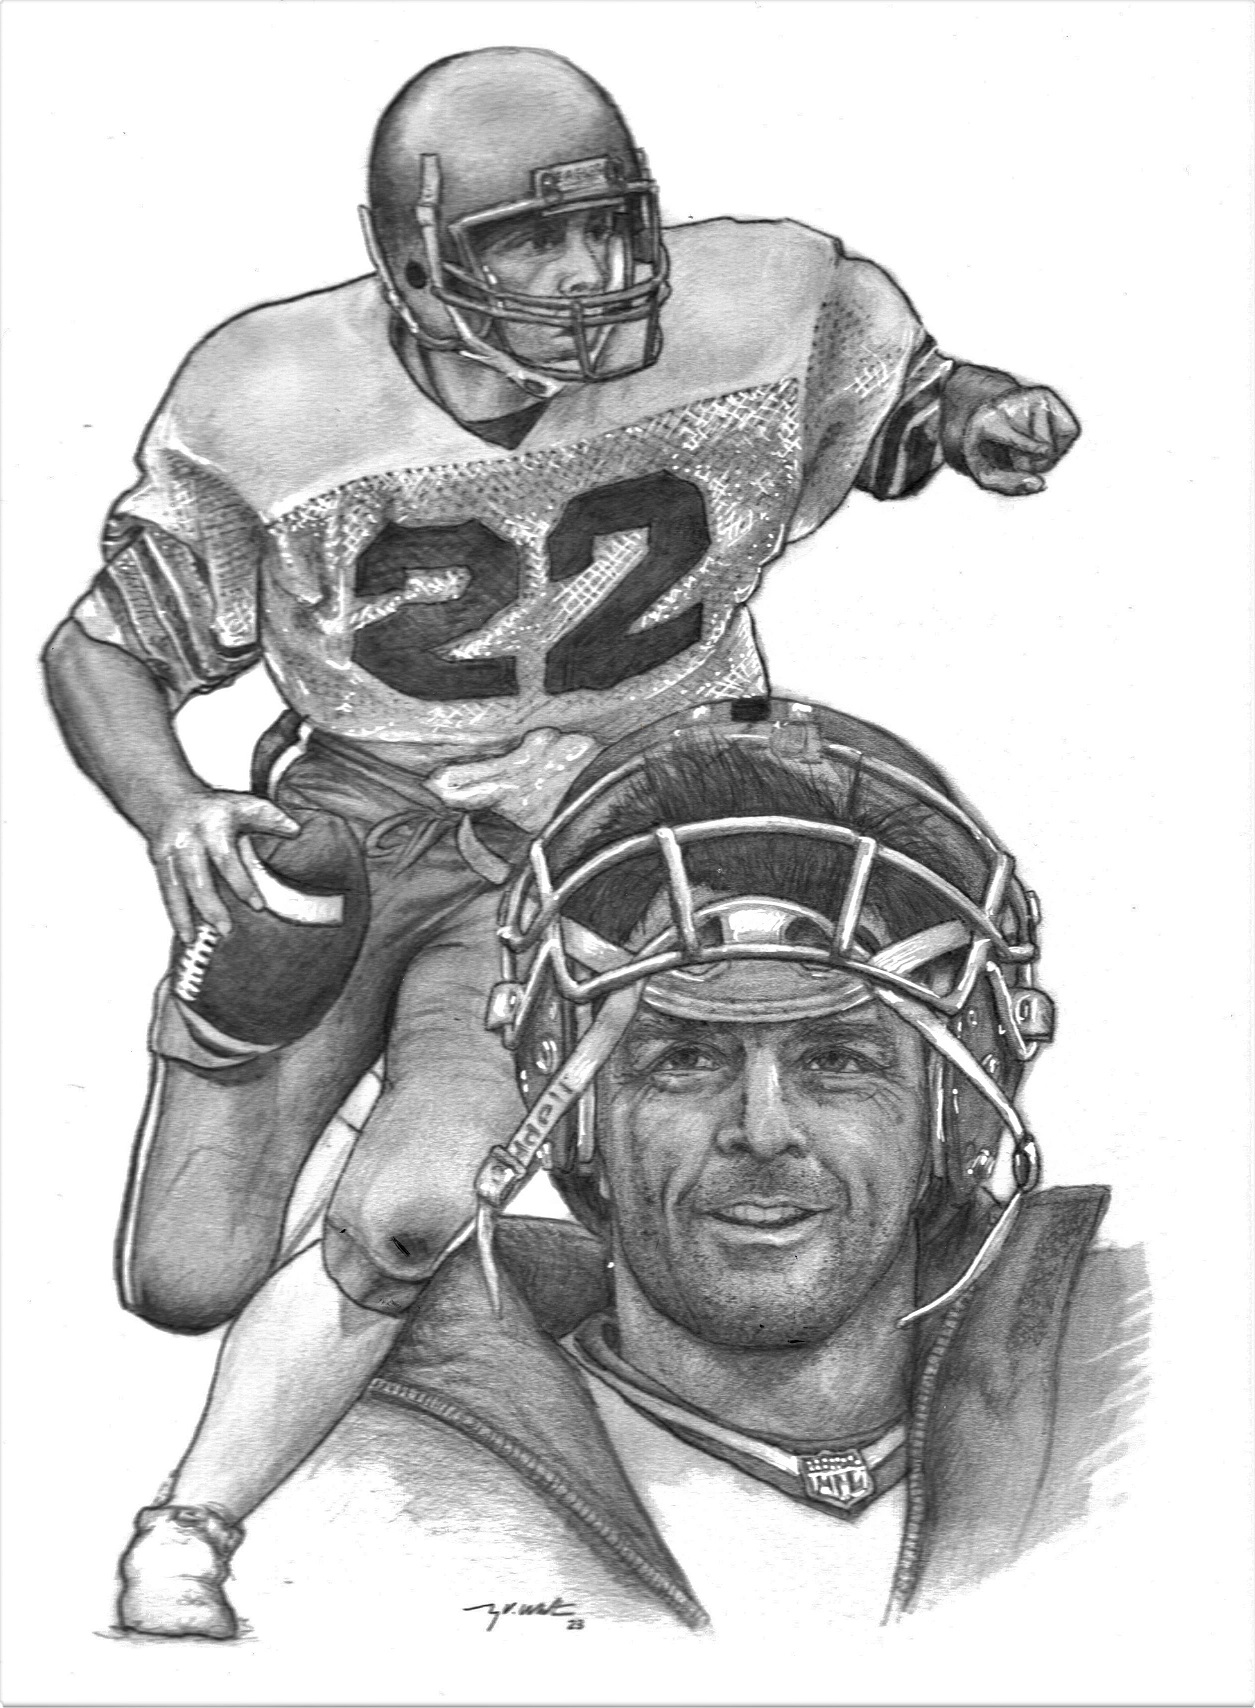 Sketch, Art, Portrait, Boston College, Quarterback, Doug Flutie, Heisman, Football